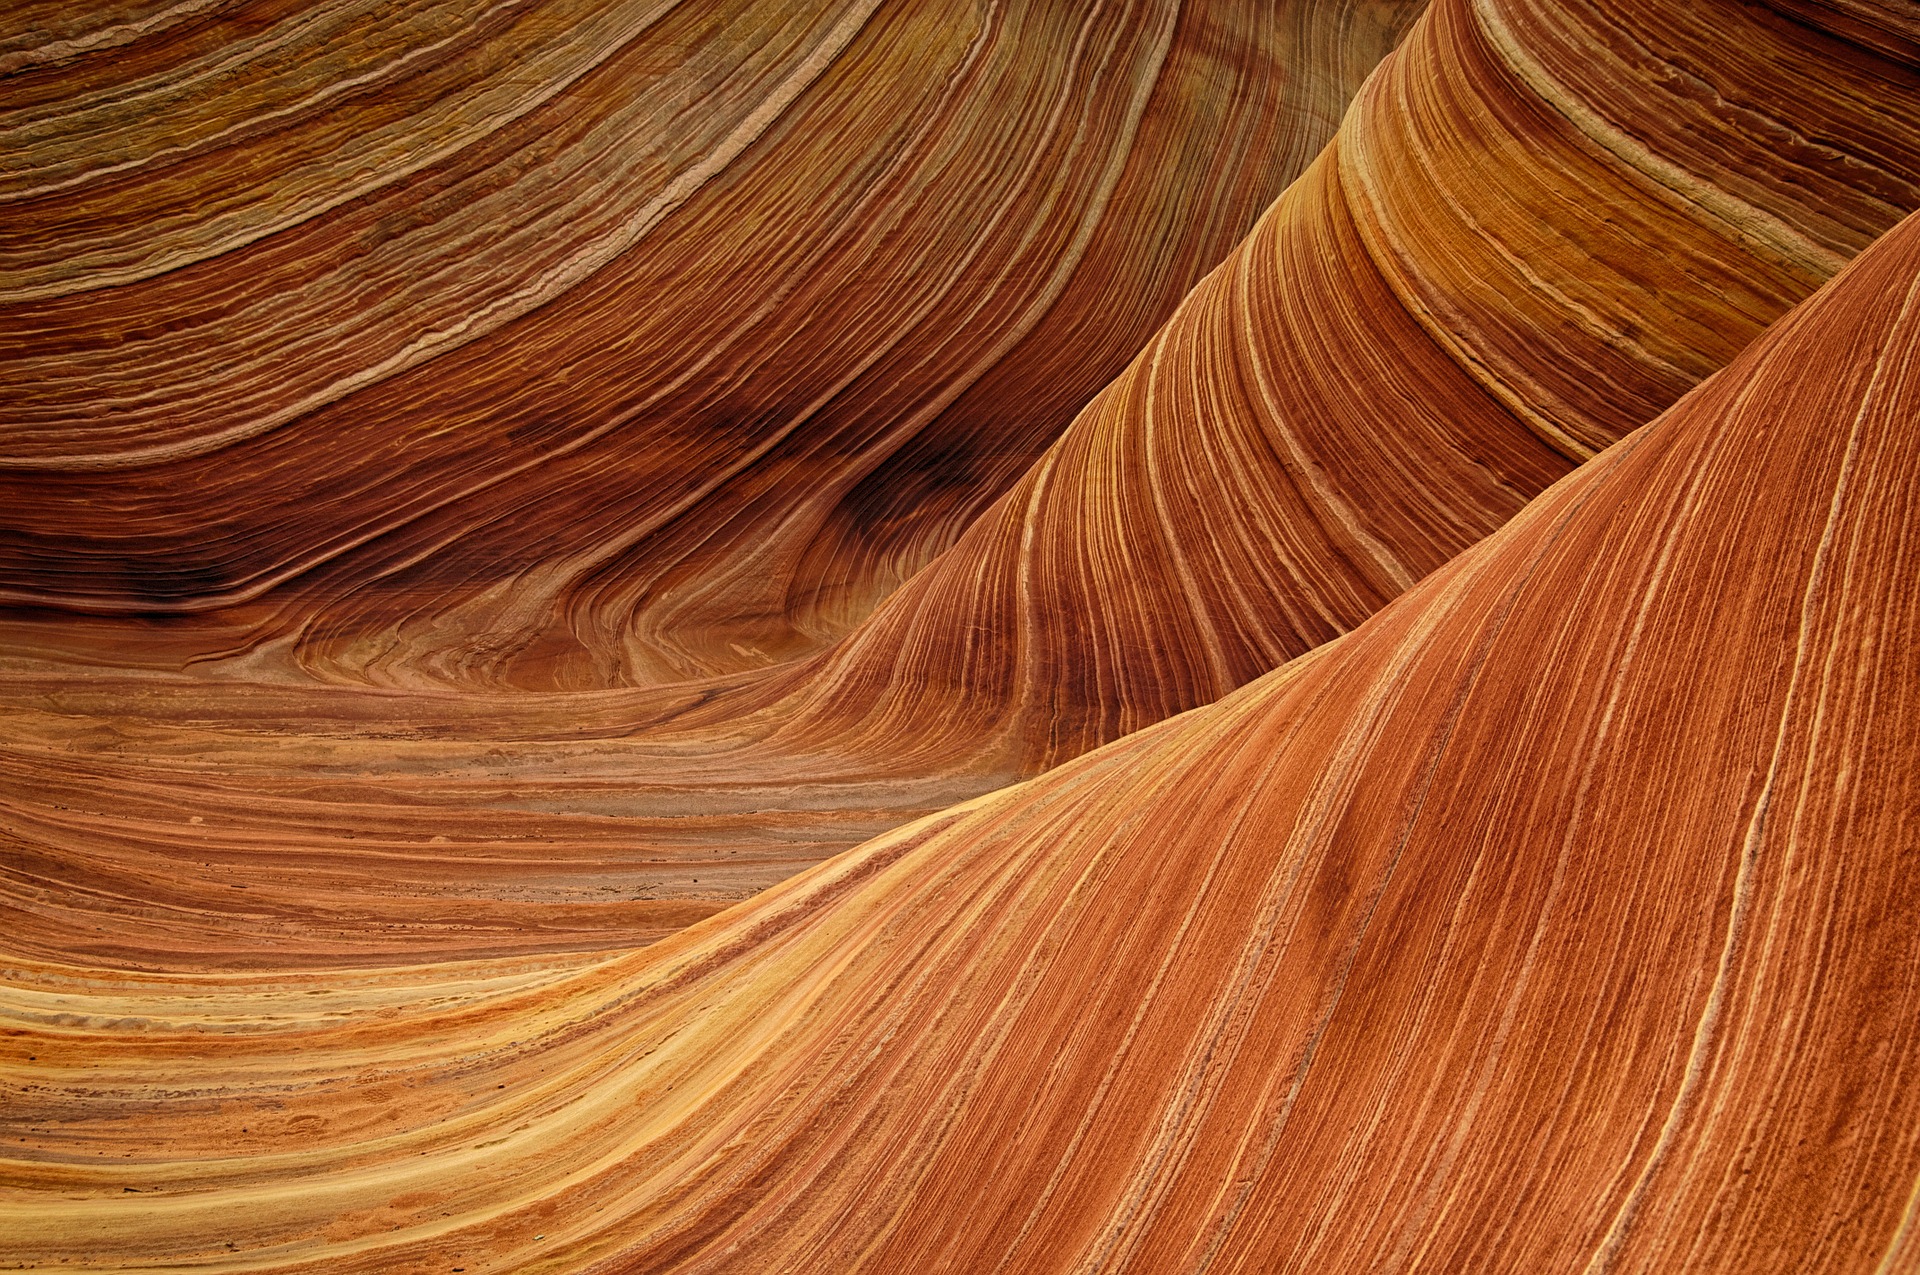 The Wave sandstone rock formation, Arizona, United States